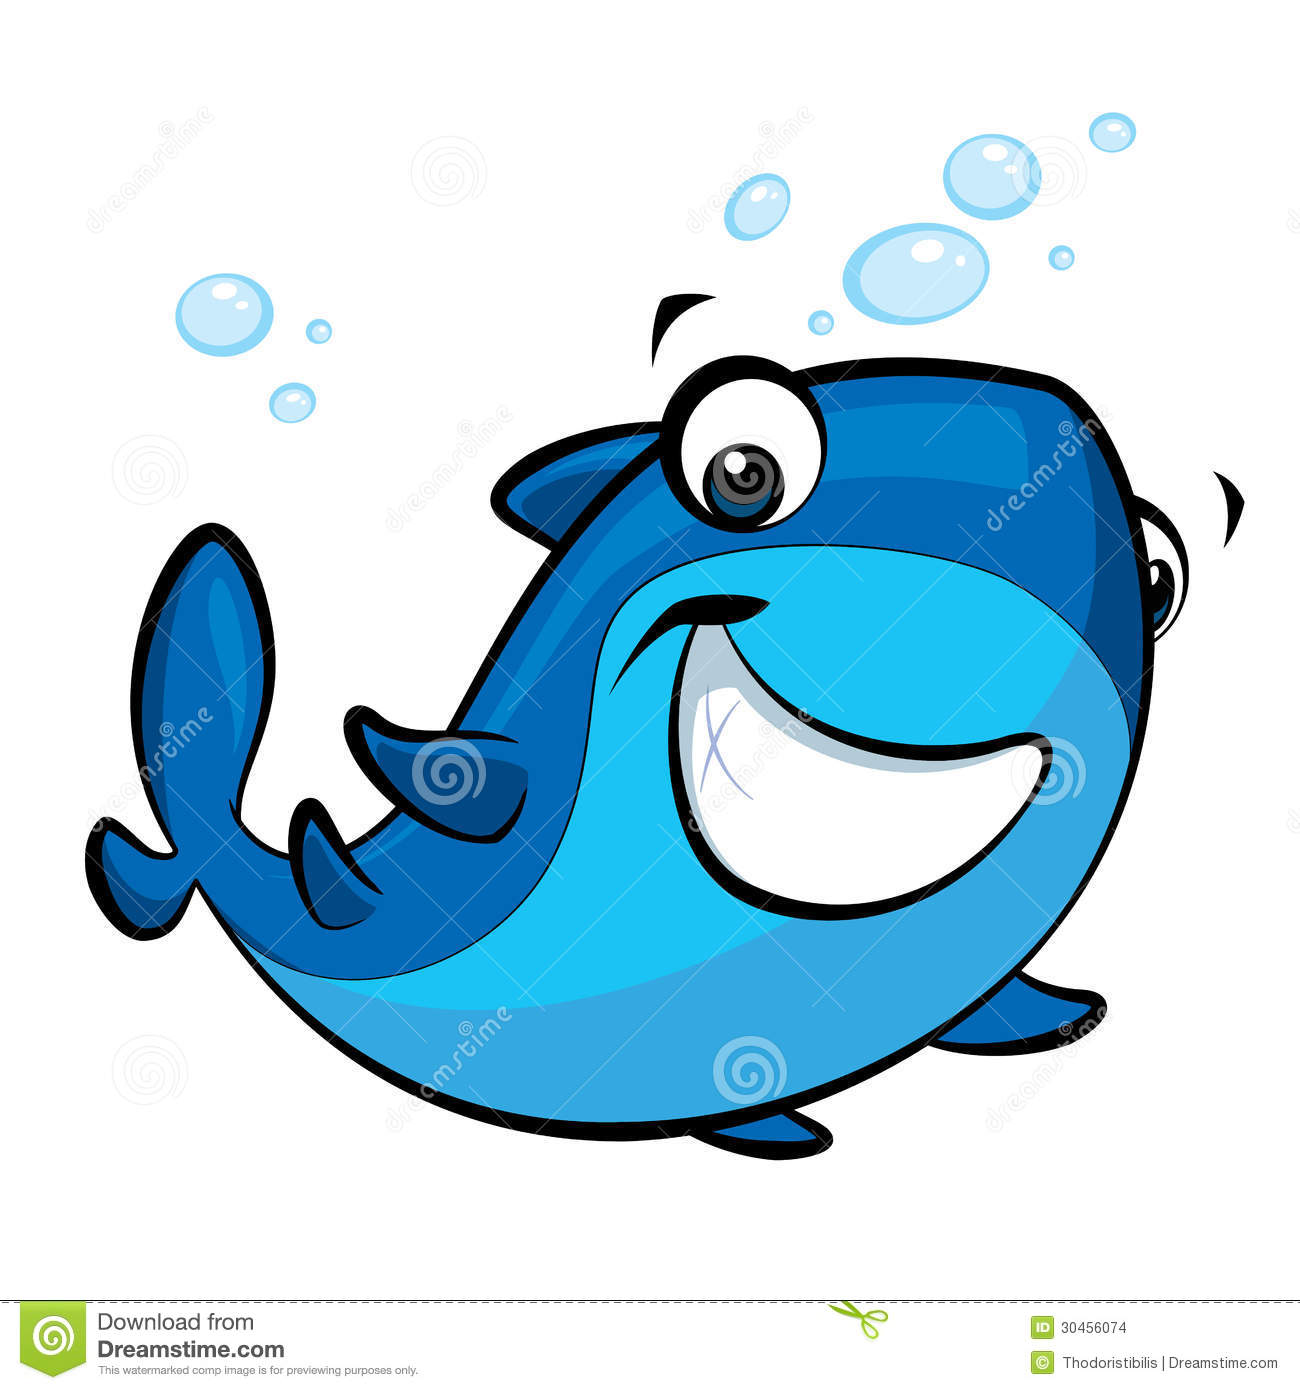 Cartoon Smiling Baby Shark Stock Images   Image  30456074